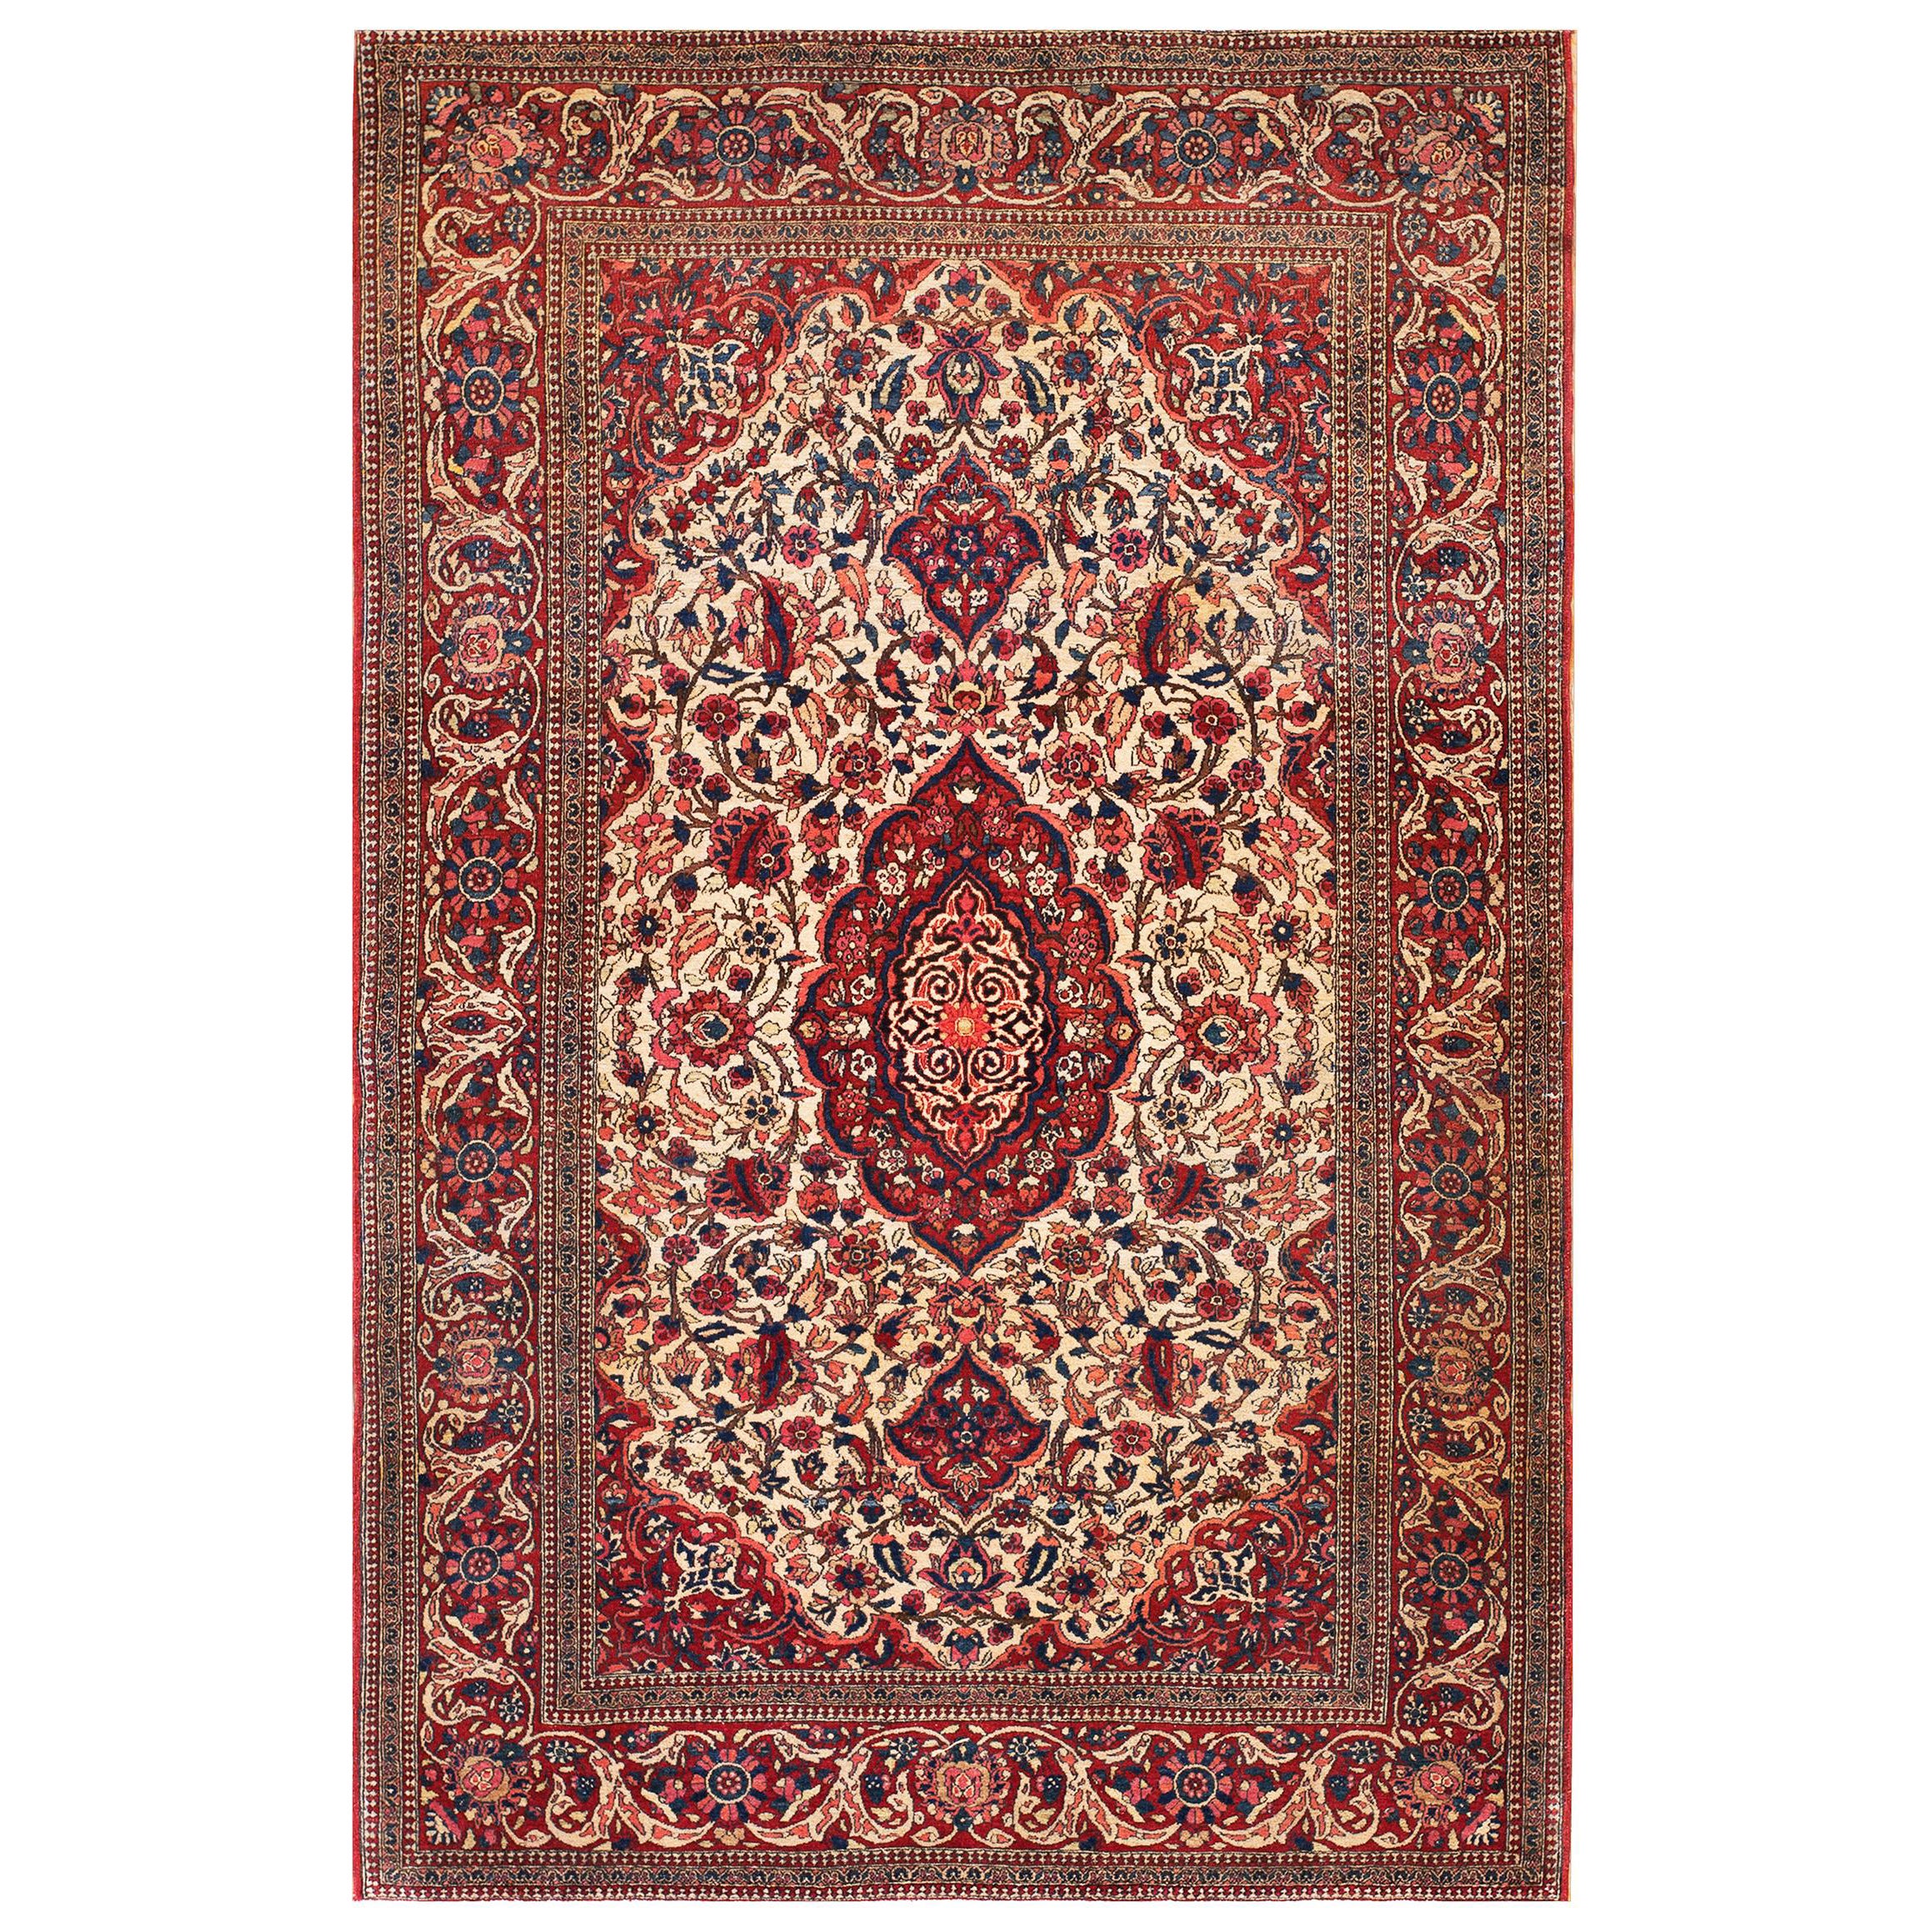 Early 20th Century Persian Isfahan Carpet ( 4'8" x 6'10" - 143 x 208 )